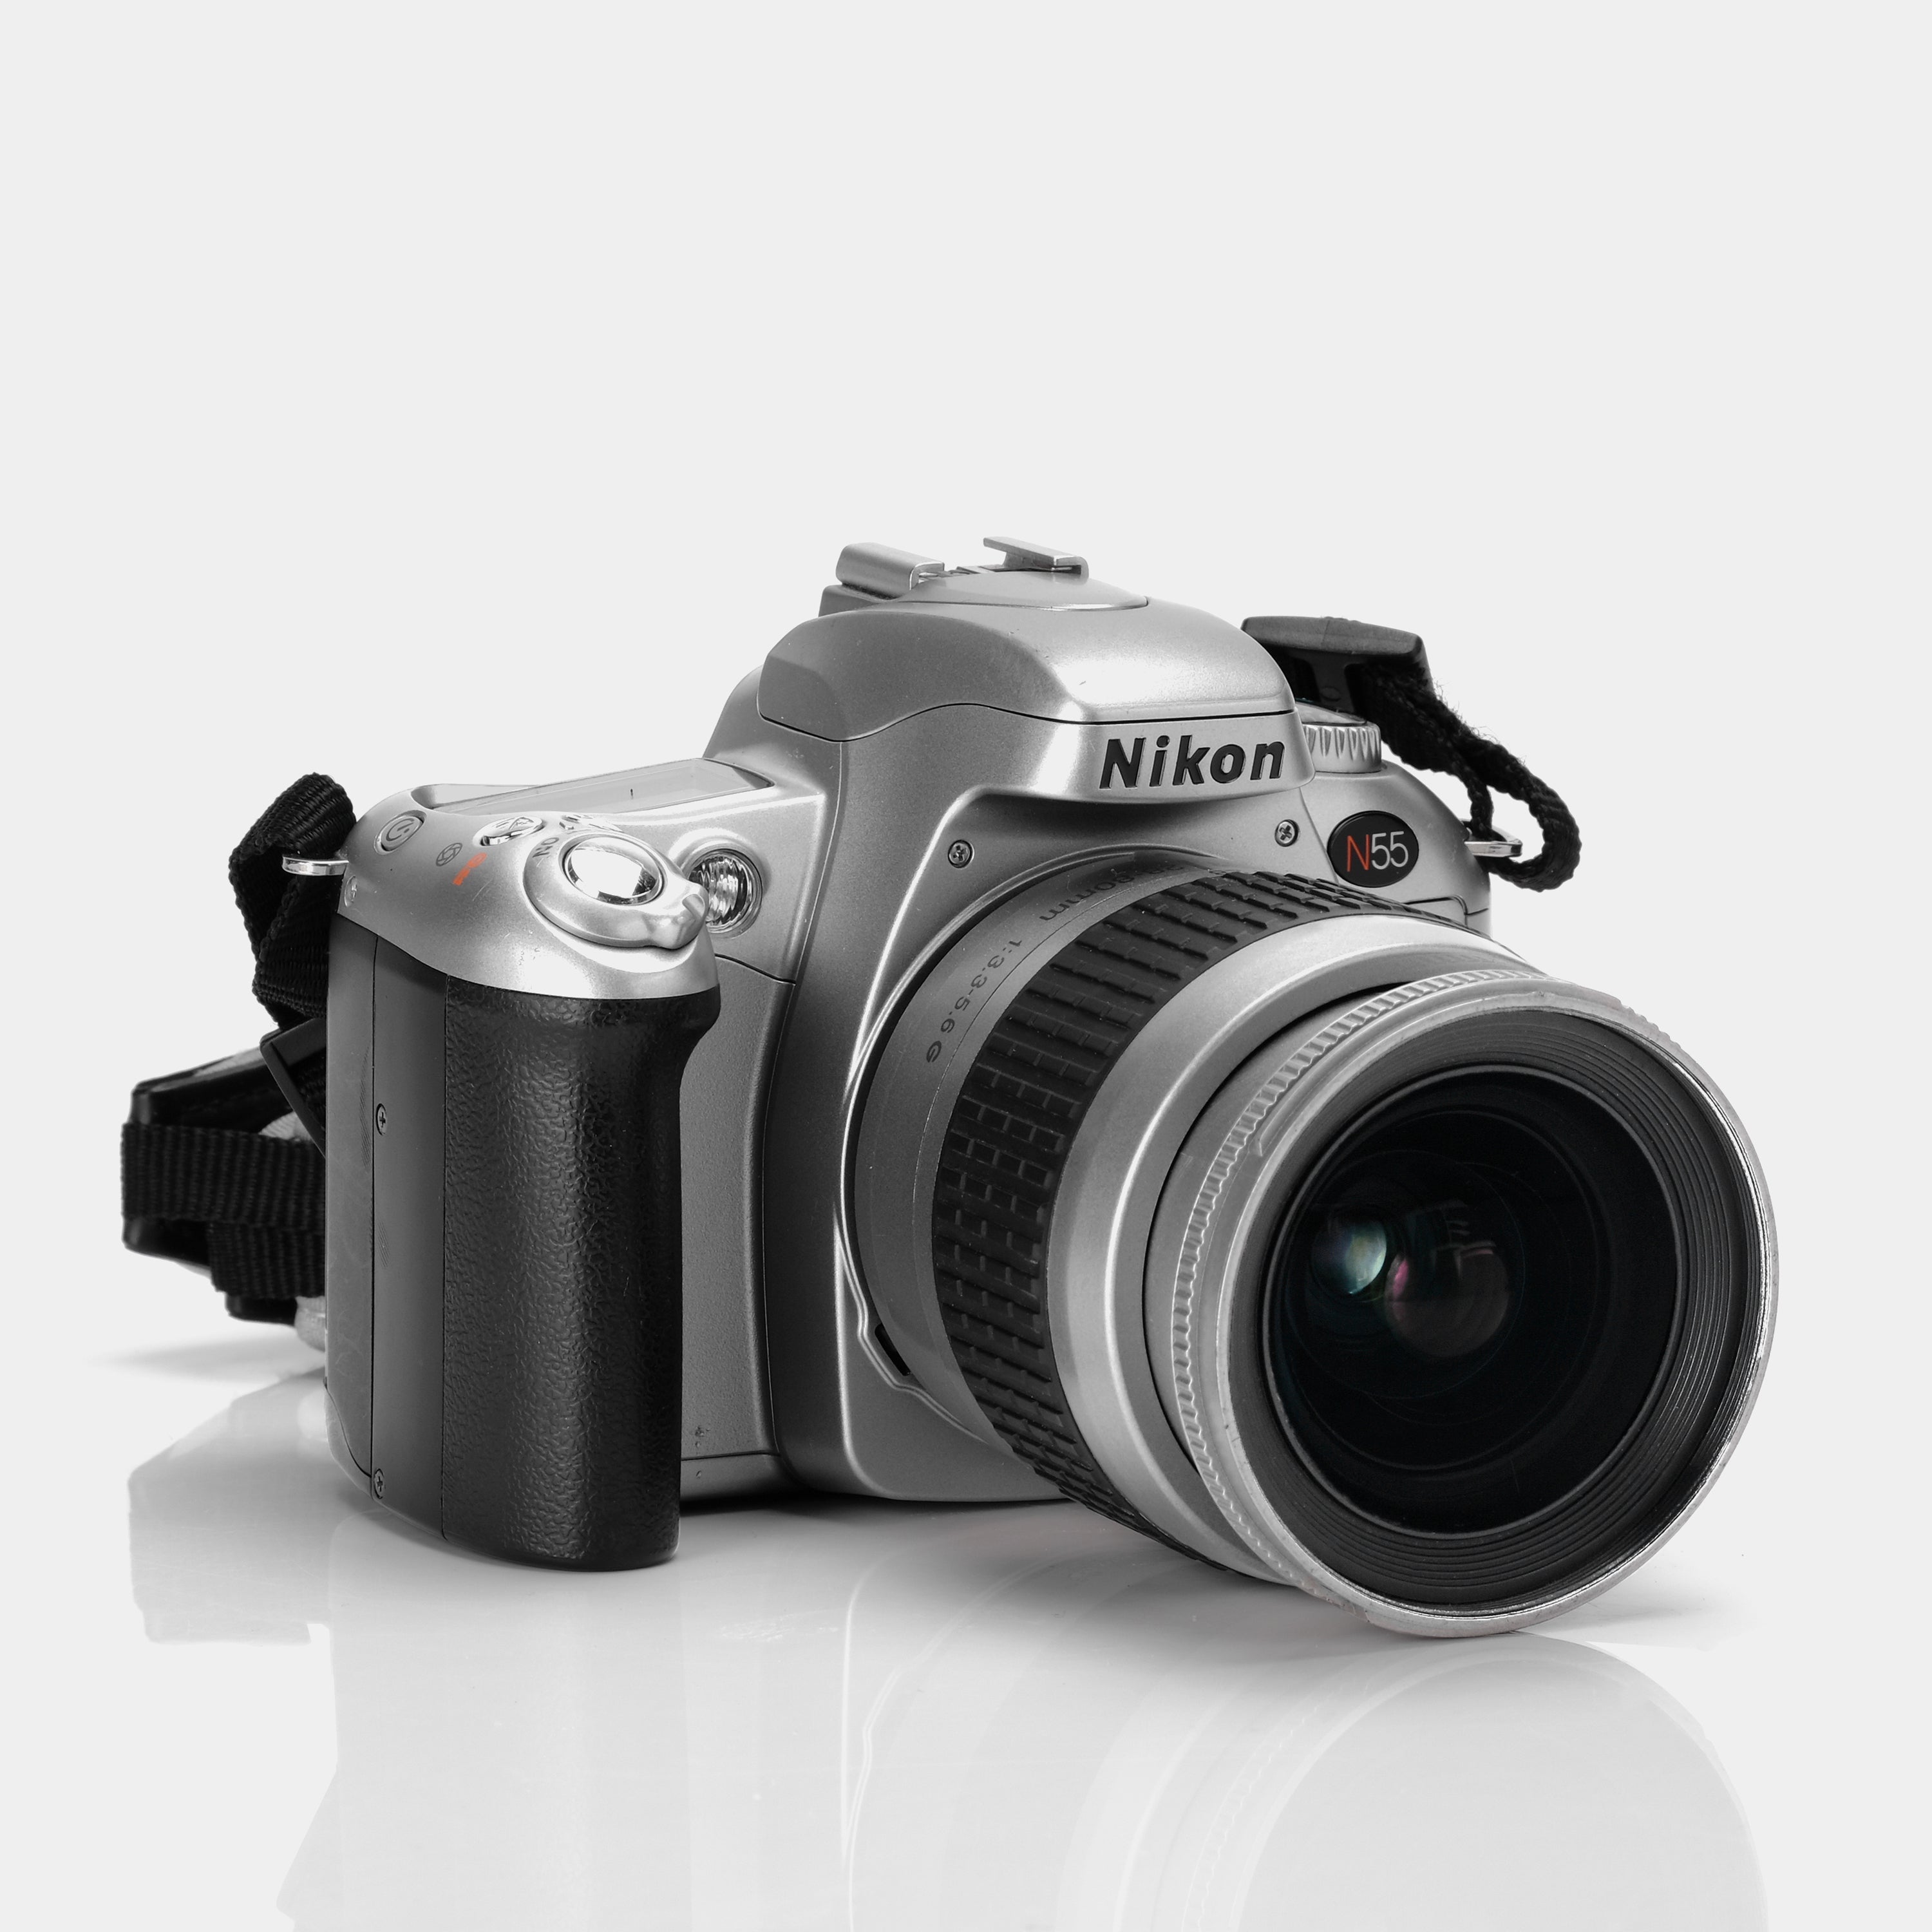 Nikon N55 SLR 35mm Film Camera